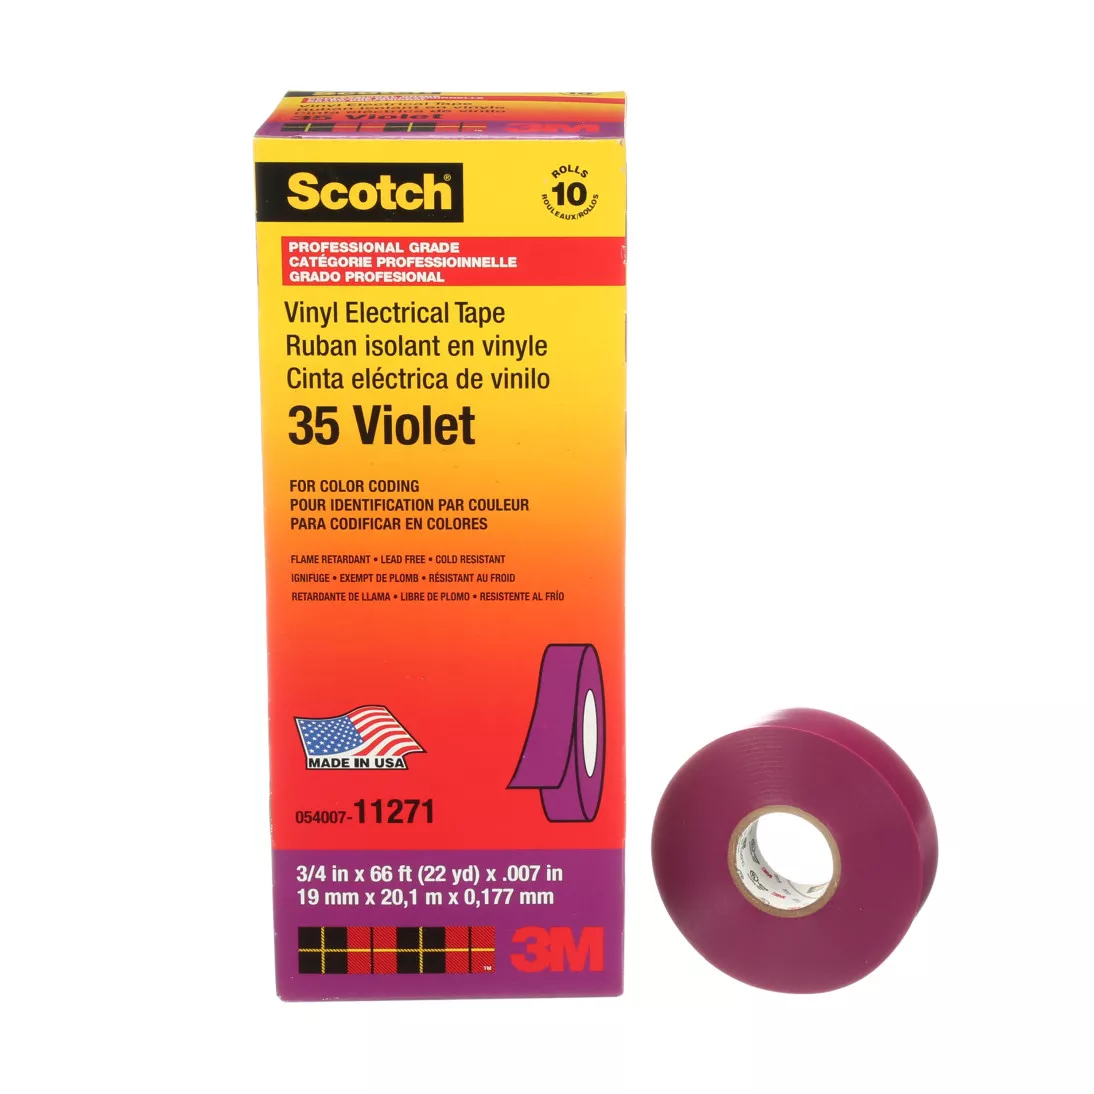 Scotch® Vinyl Color Coding Electrical Tape 35, 3/4 in x 66 ft, Violet,
10 rolls/carton, 100 rolls/Case